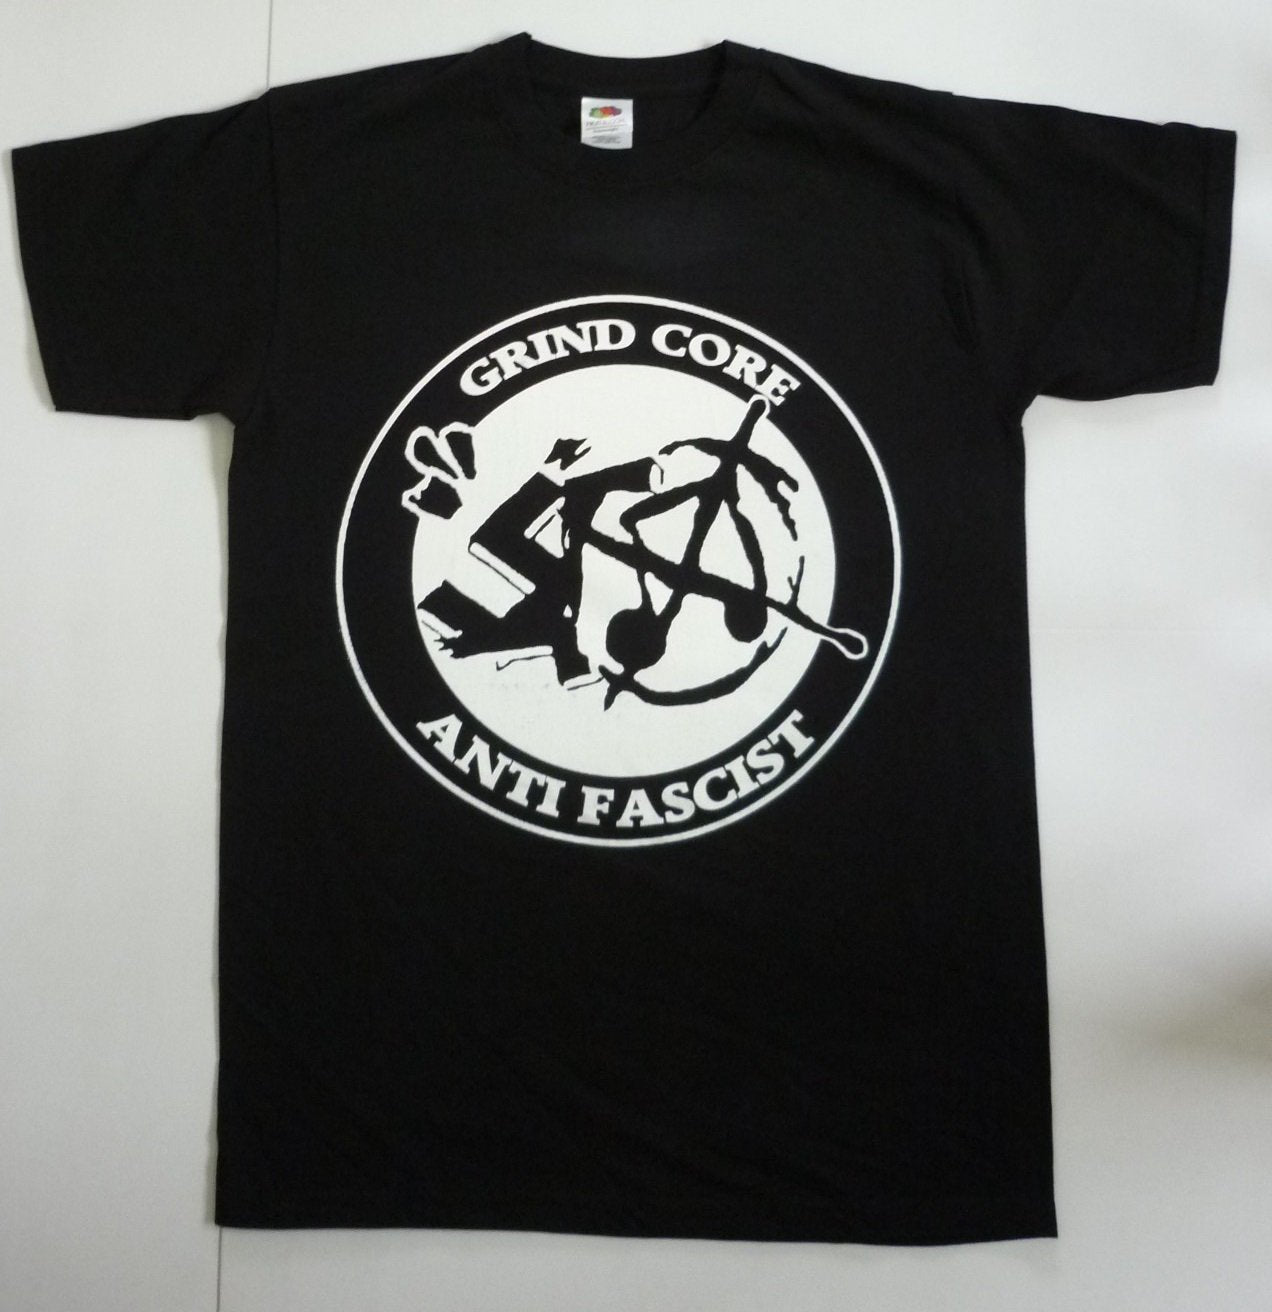 Grindcore Anti Fascist - T-shirt